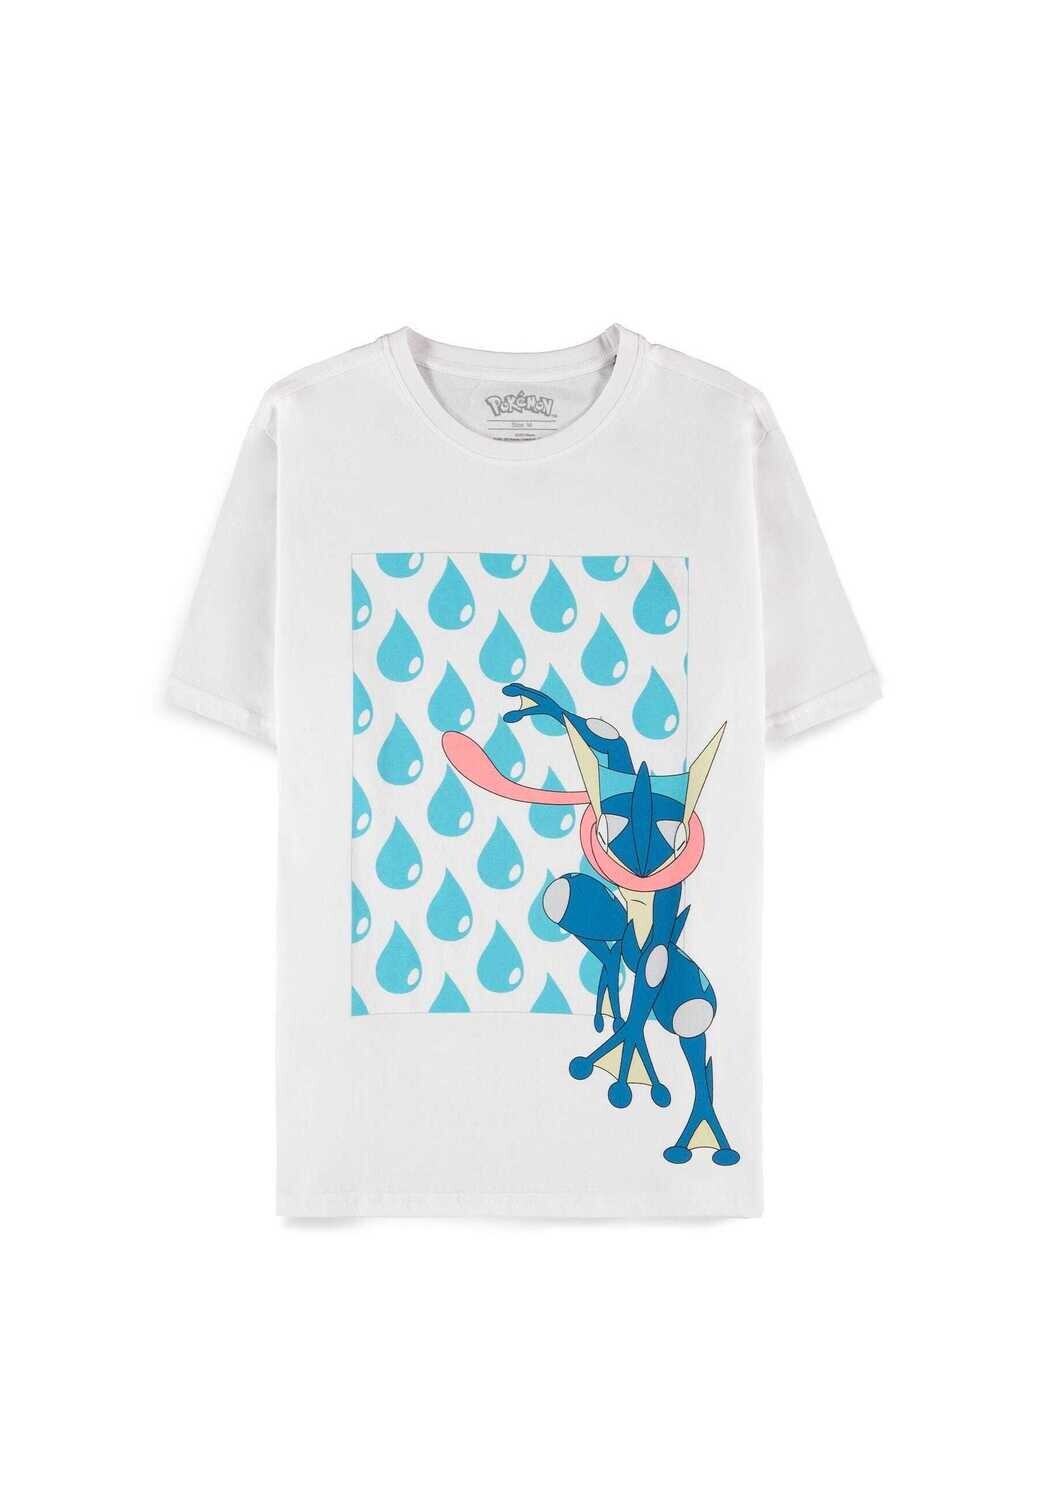 Pokémon - Greninja - Men's Short Sleeved T-shirt